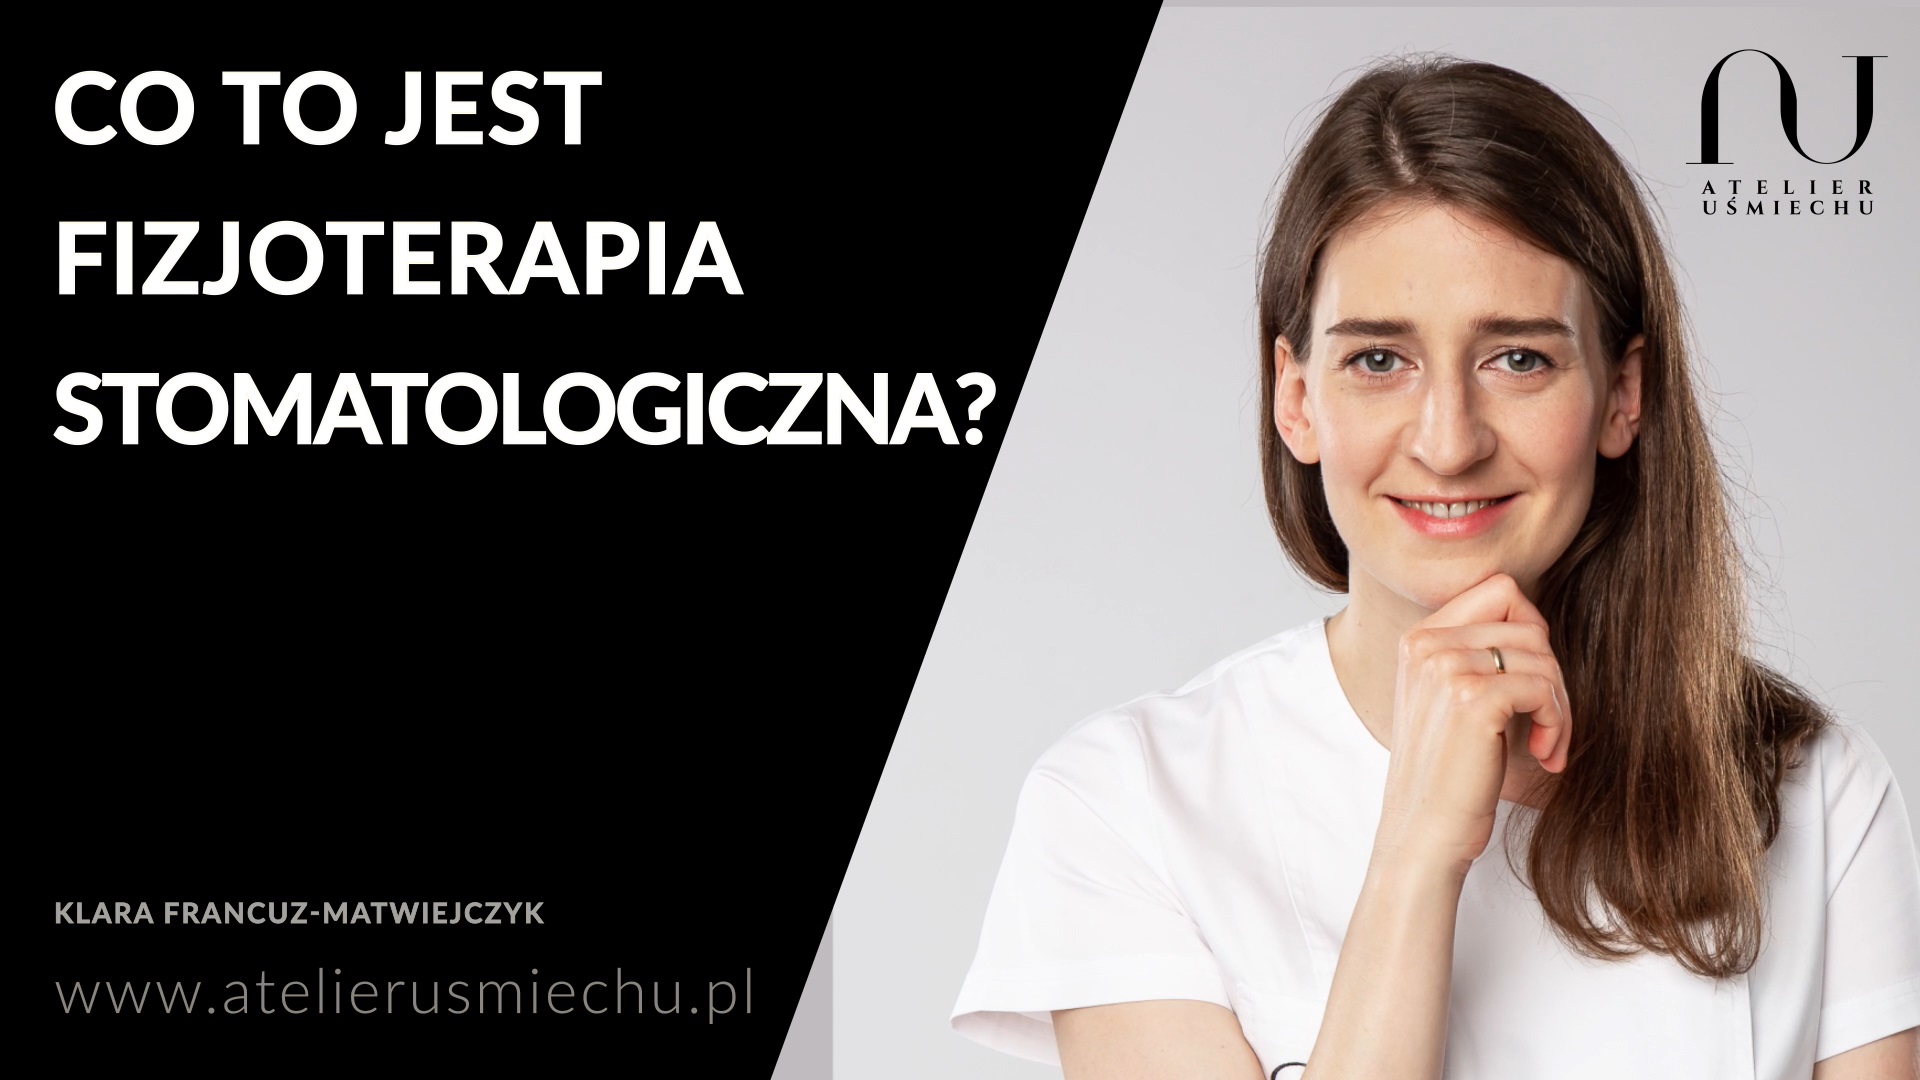 Co to jest fizjoterapia stomatologiczna?